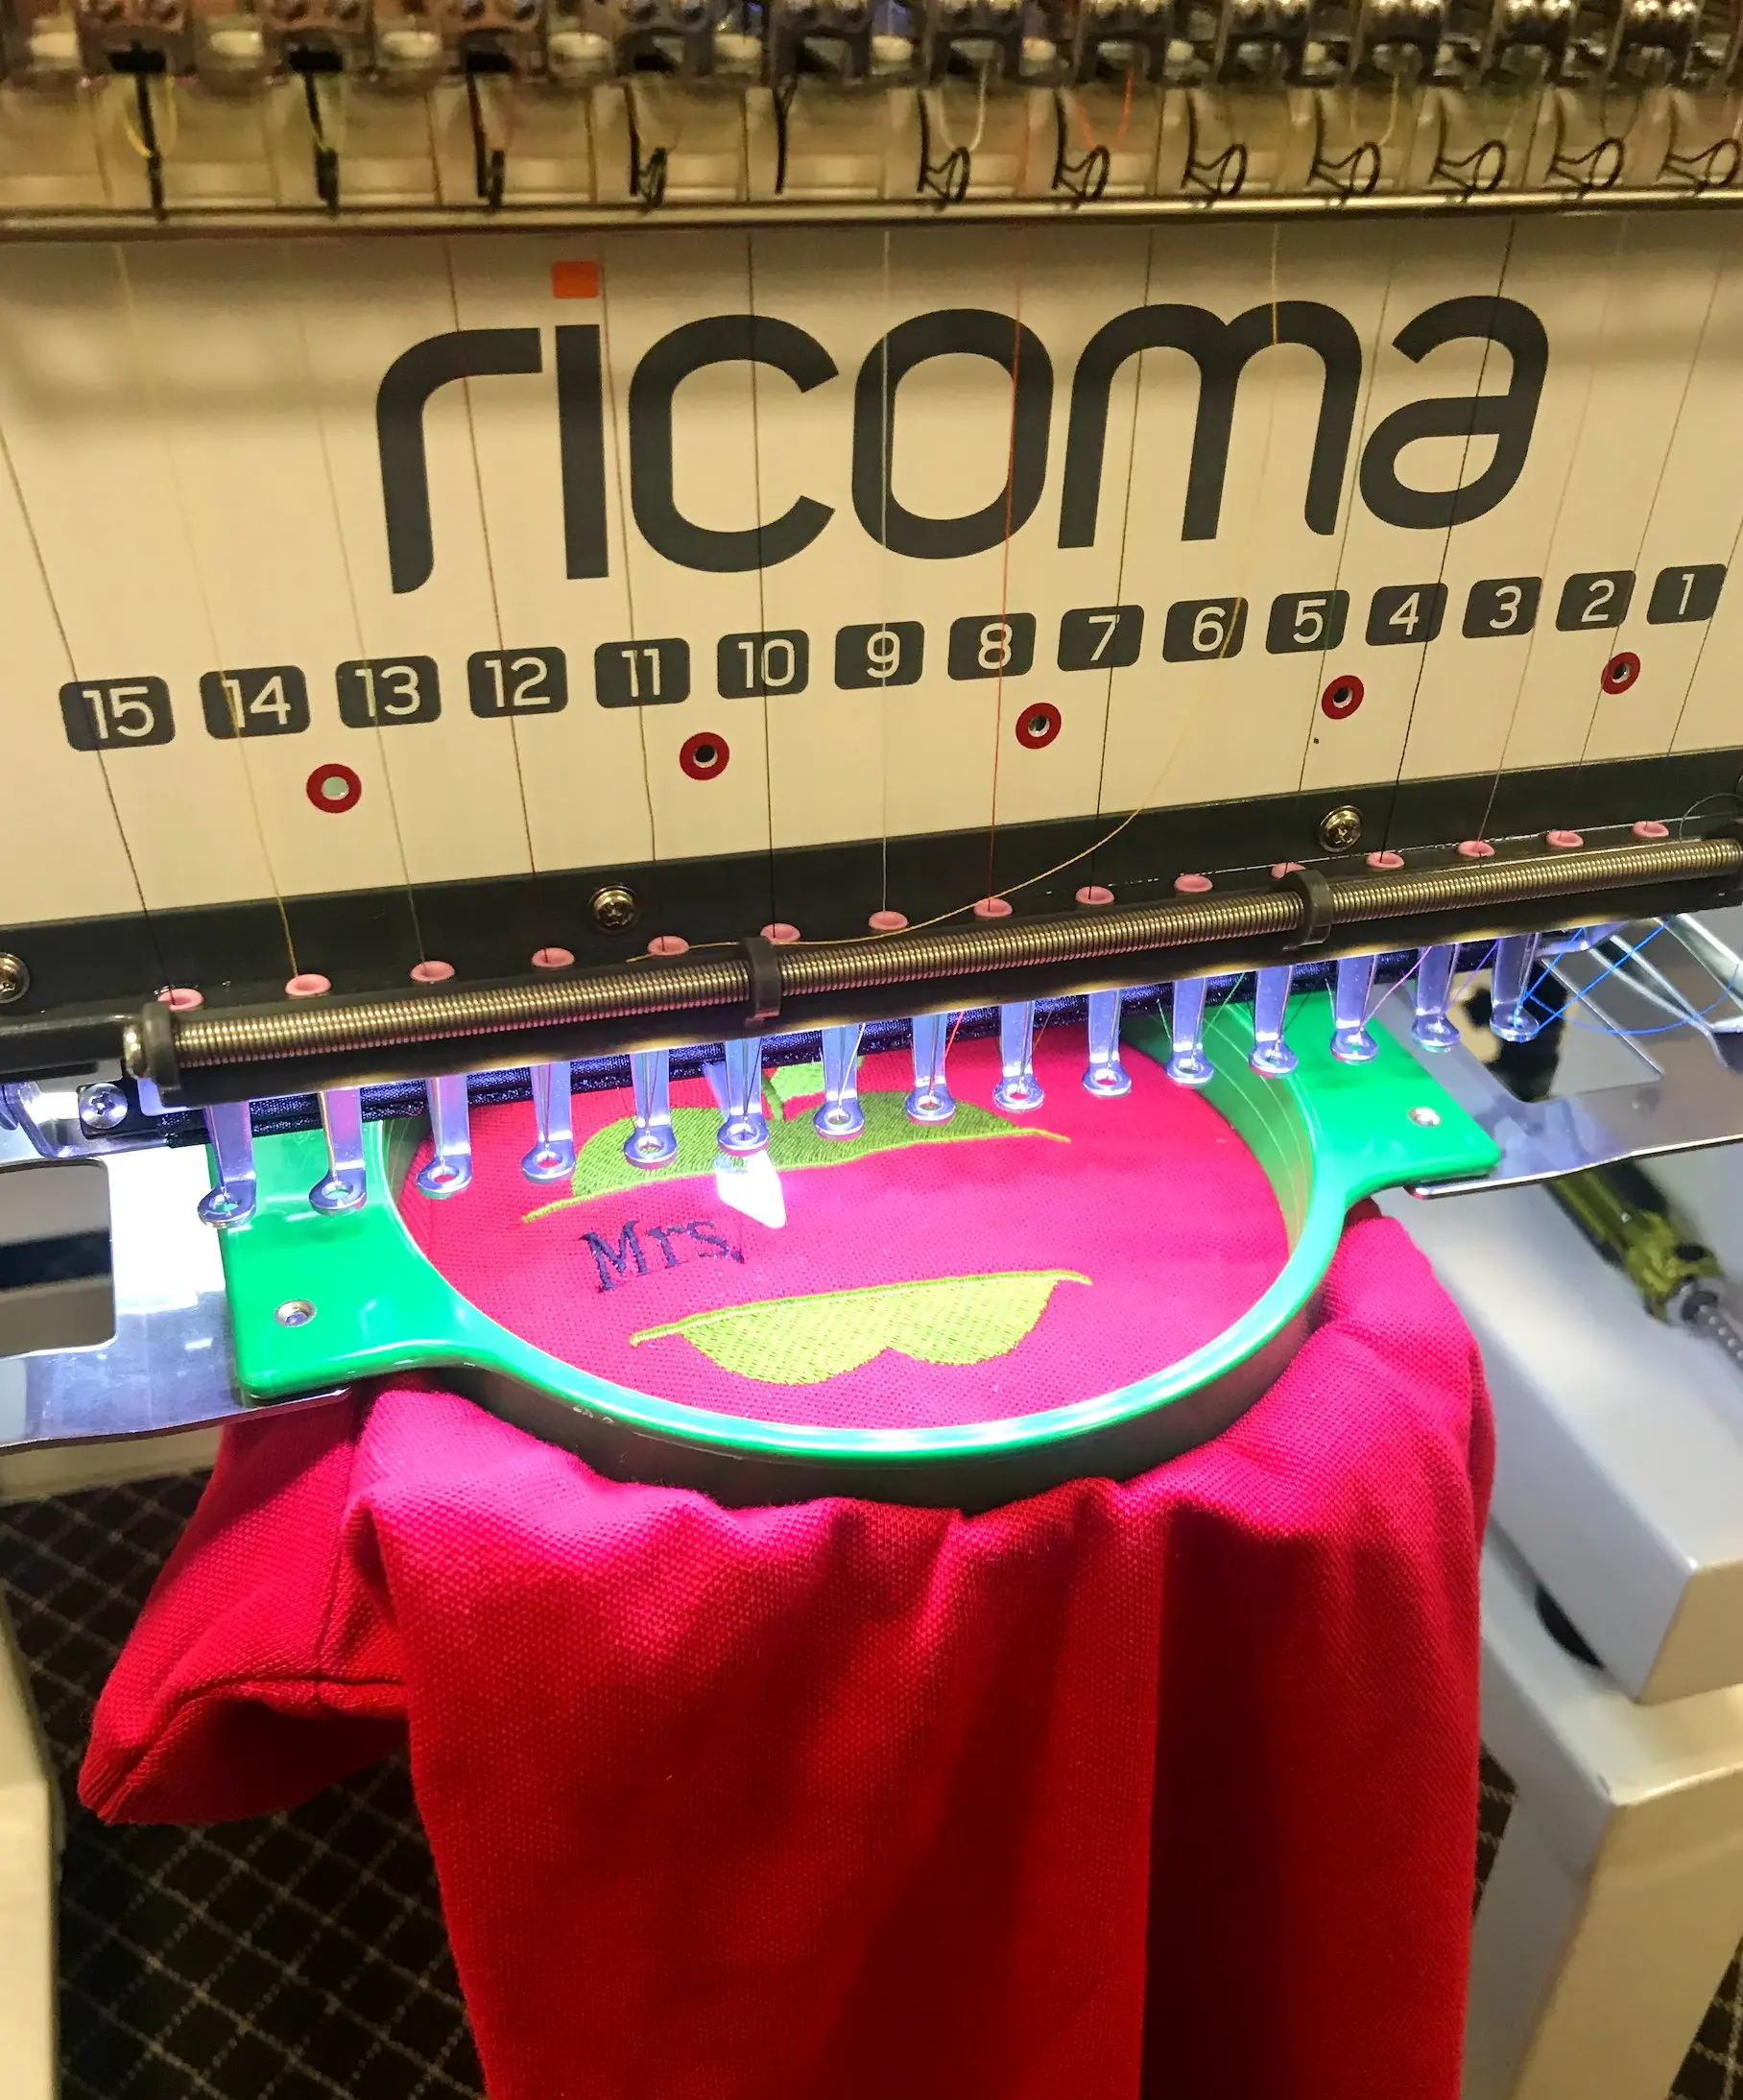 ricoma 1 head embroidery machine 12/15/20